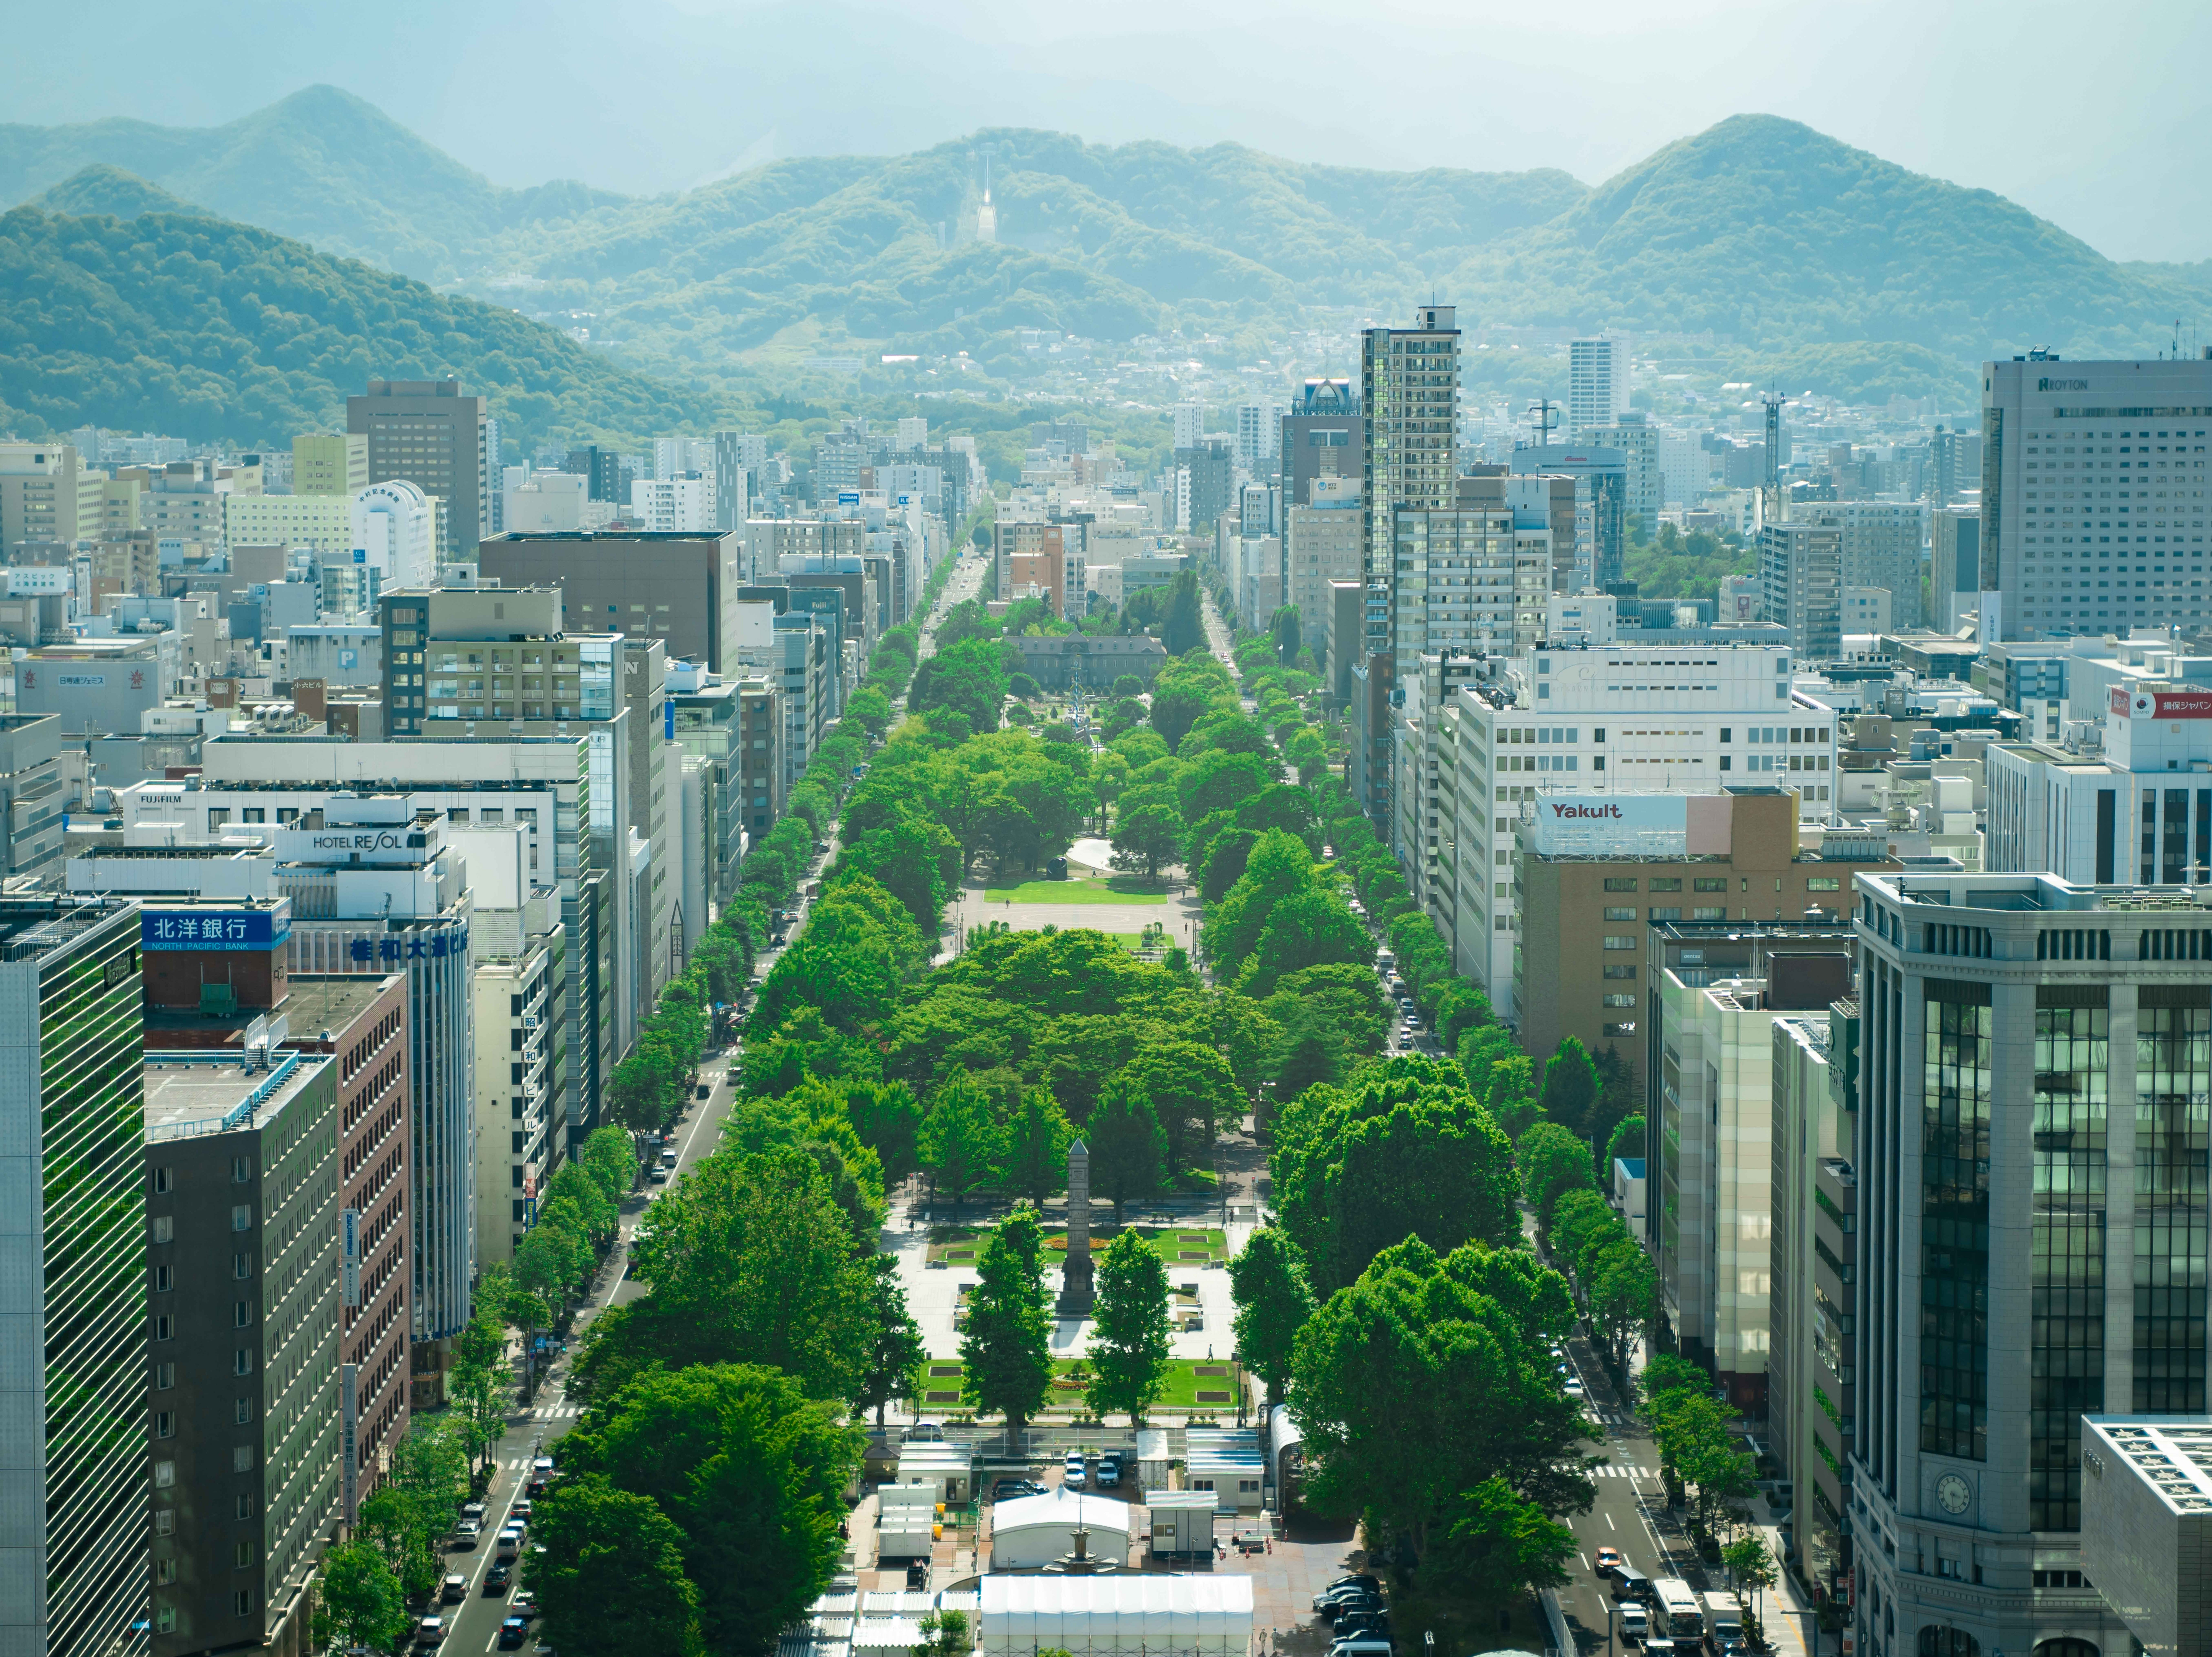 Green metropolis: Sapporo incorporates eco design and a respect for nature